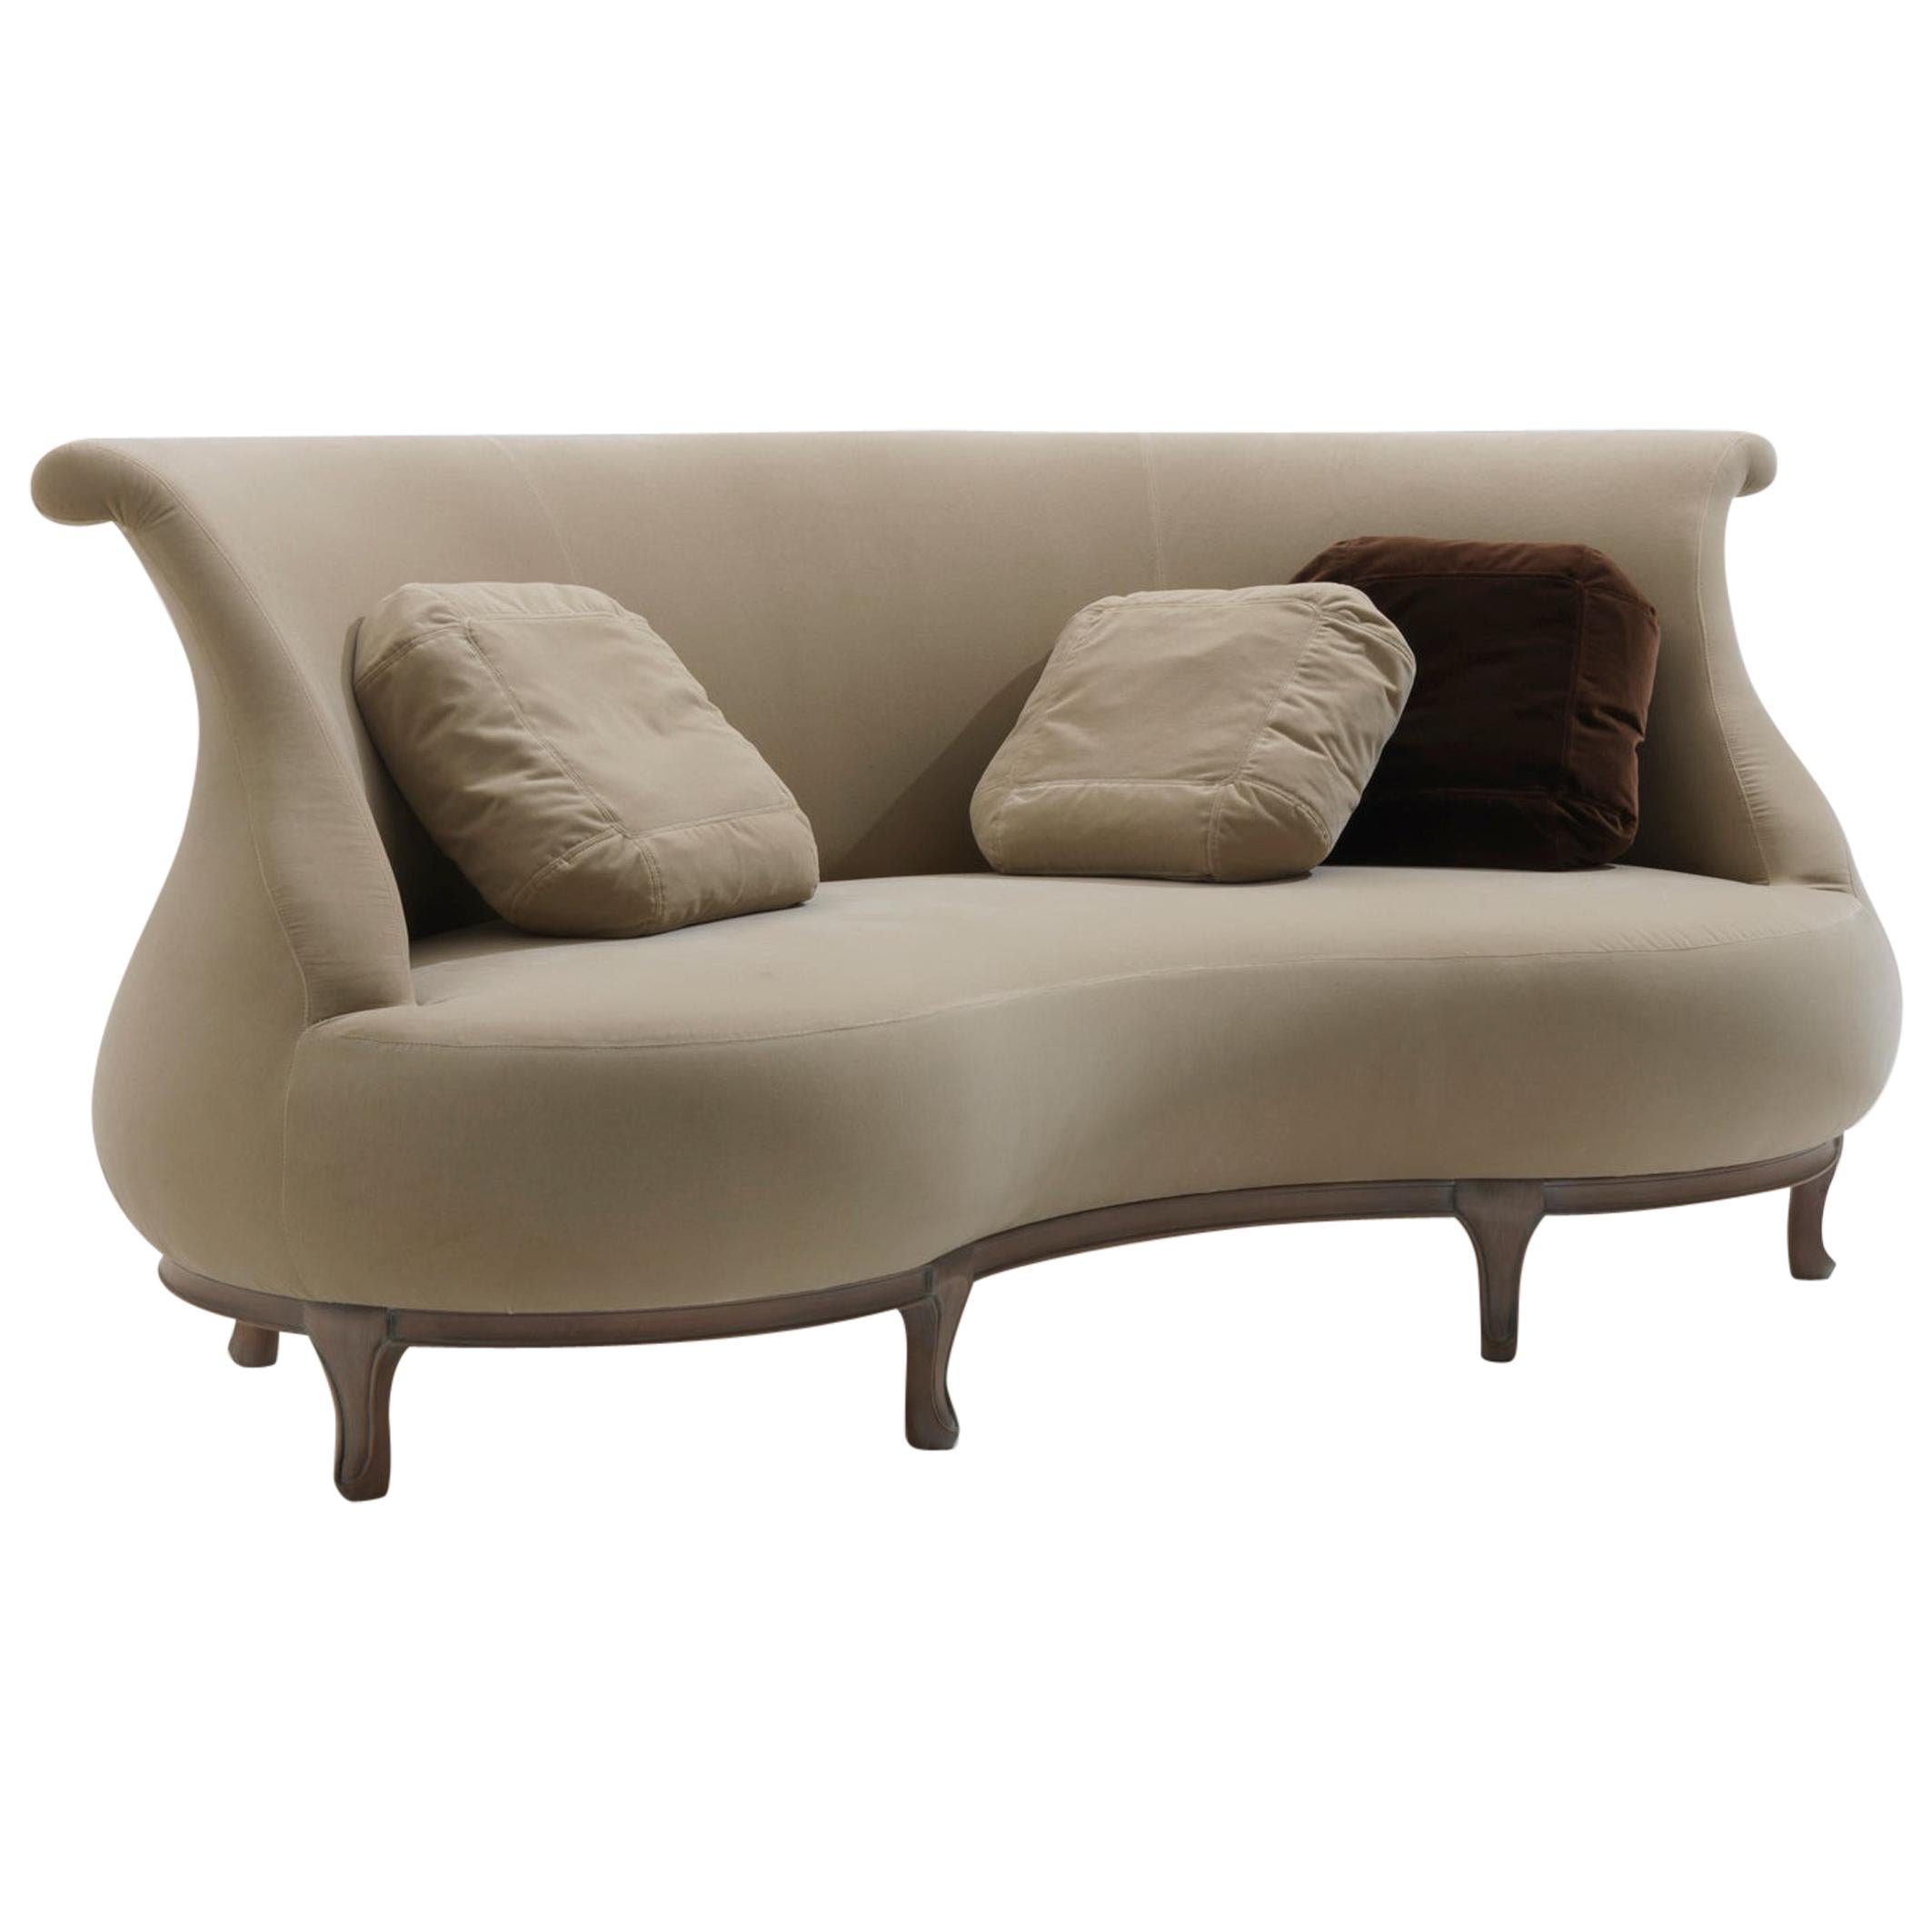 PLUMP Beige Velvet Sofa with Solid Walnut Wooden Frame by Nigel Coates